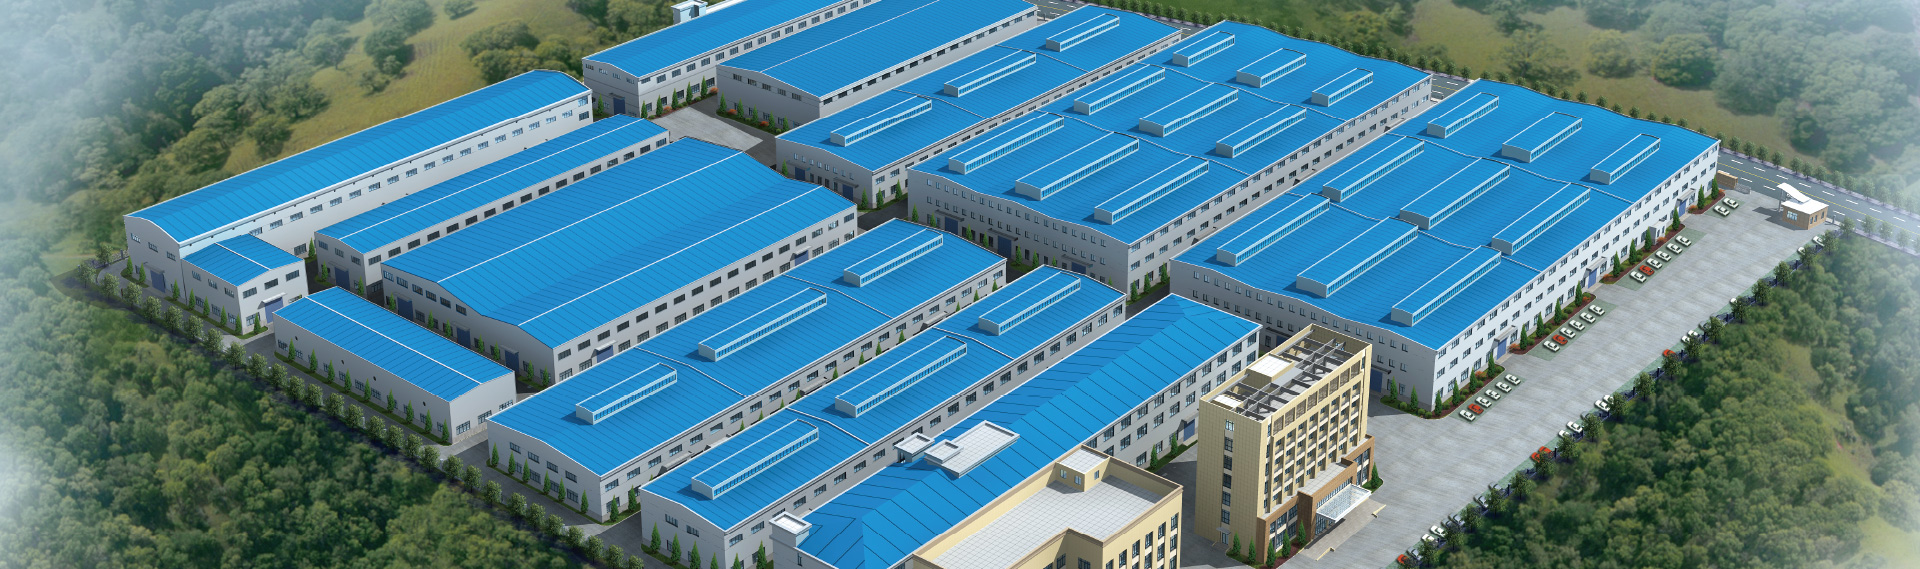 Hangzhou Sanpu Machinery Co., Ltd.